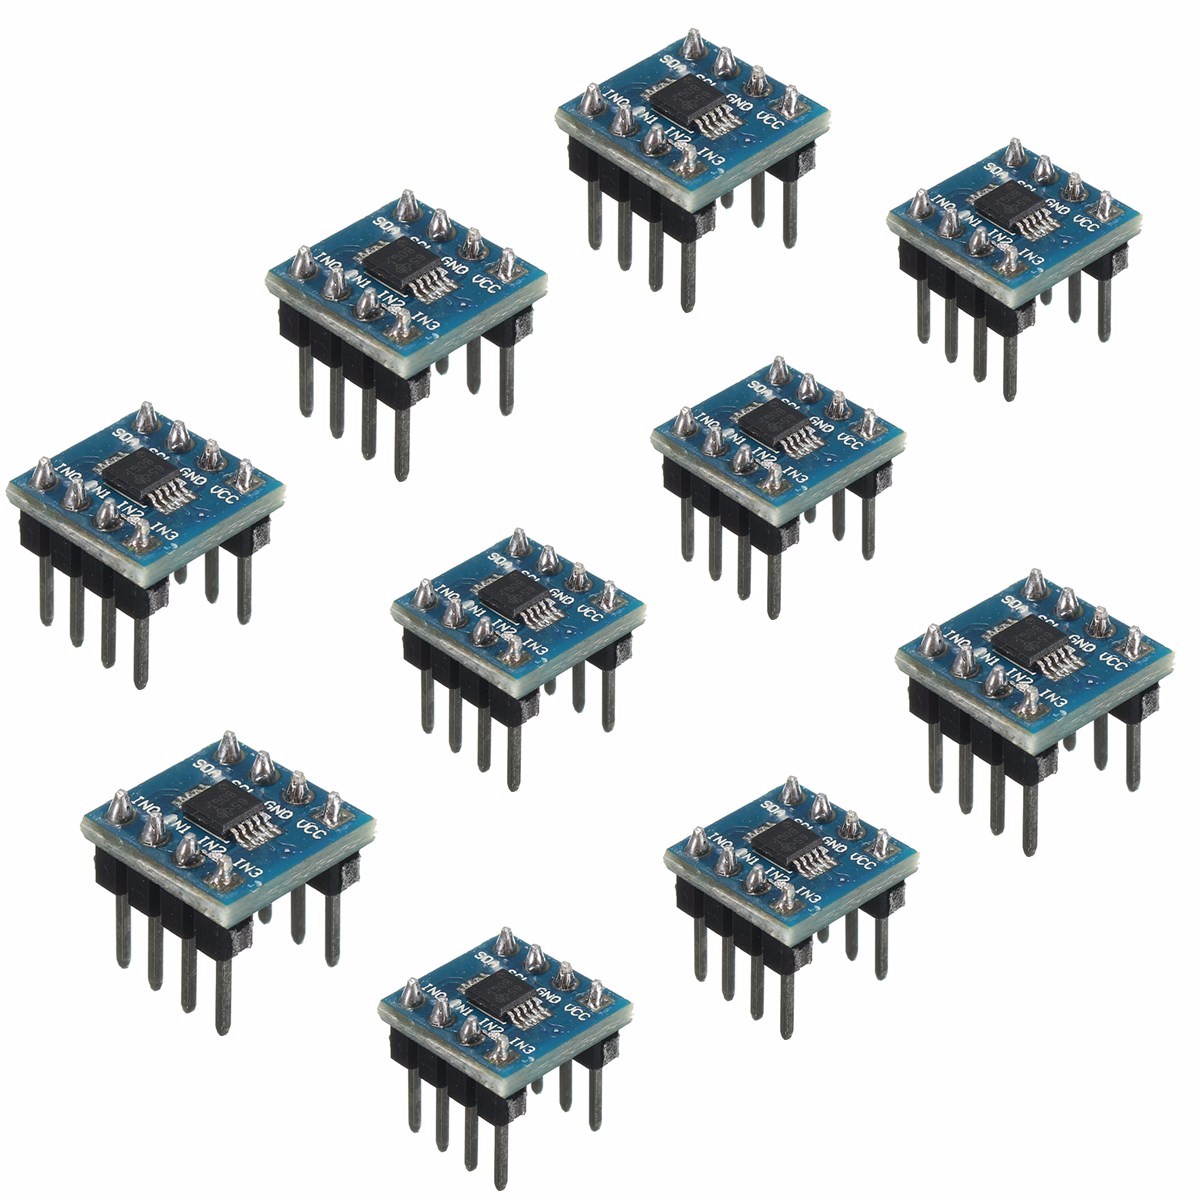 

10Pcs Mini ADS1115 Module 4 Channel 16 Bit I2C ADC Pro Gain Amplifier For Arduino